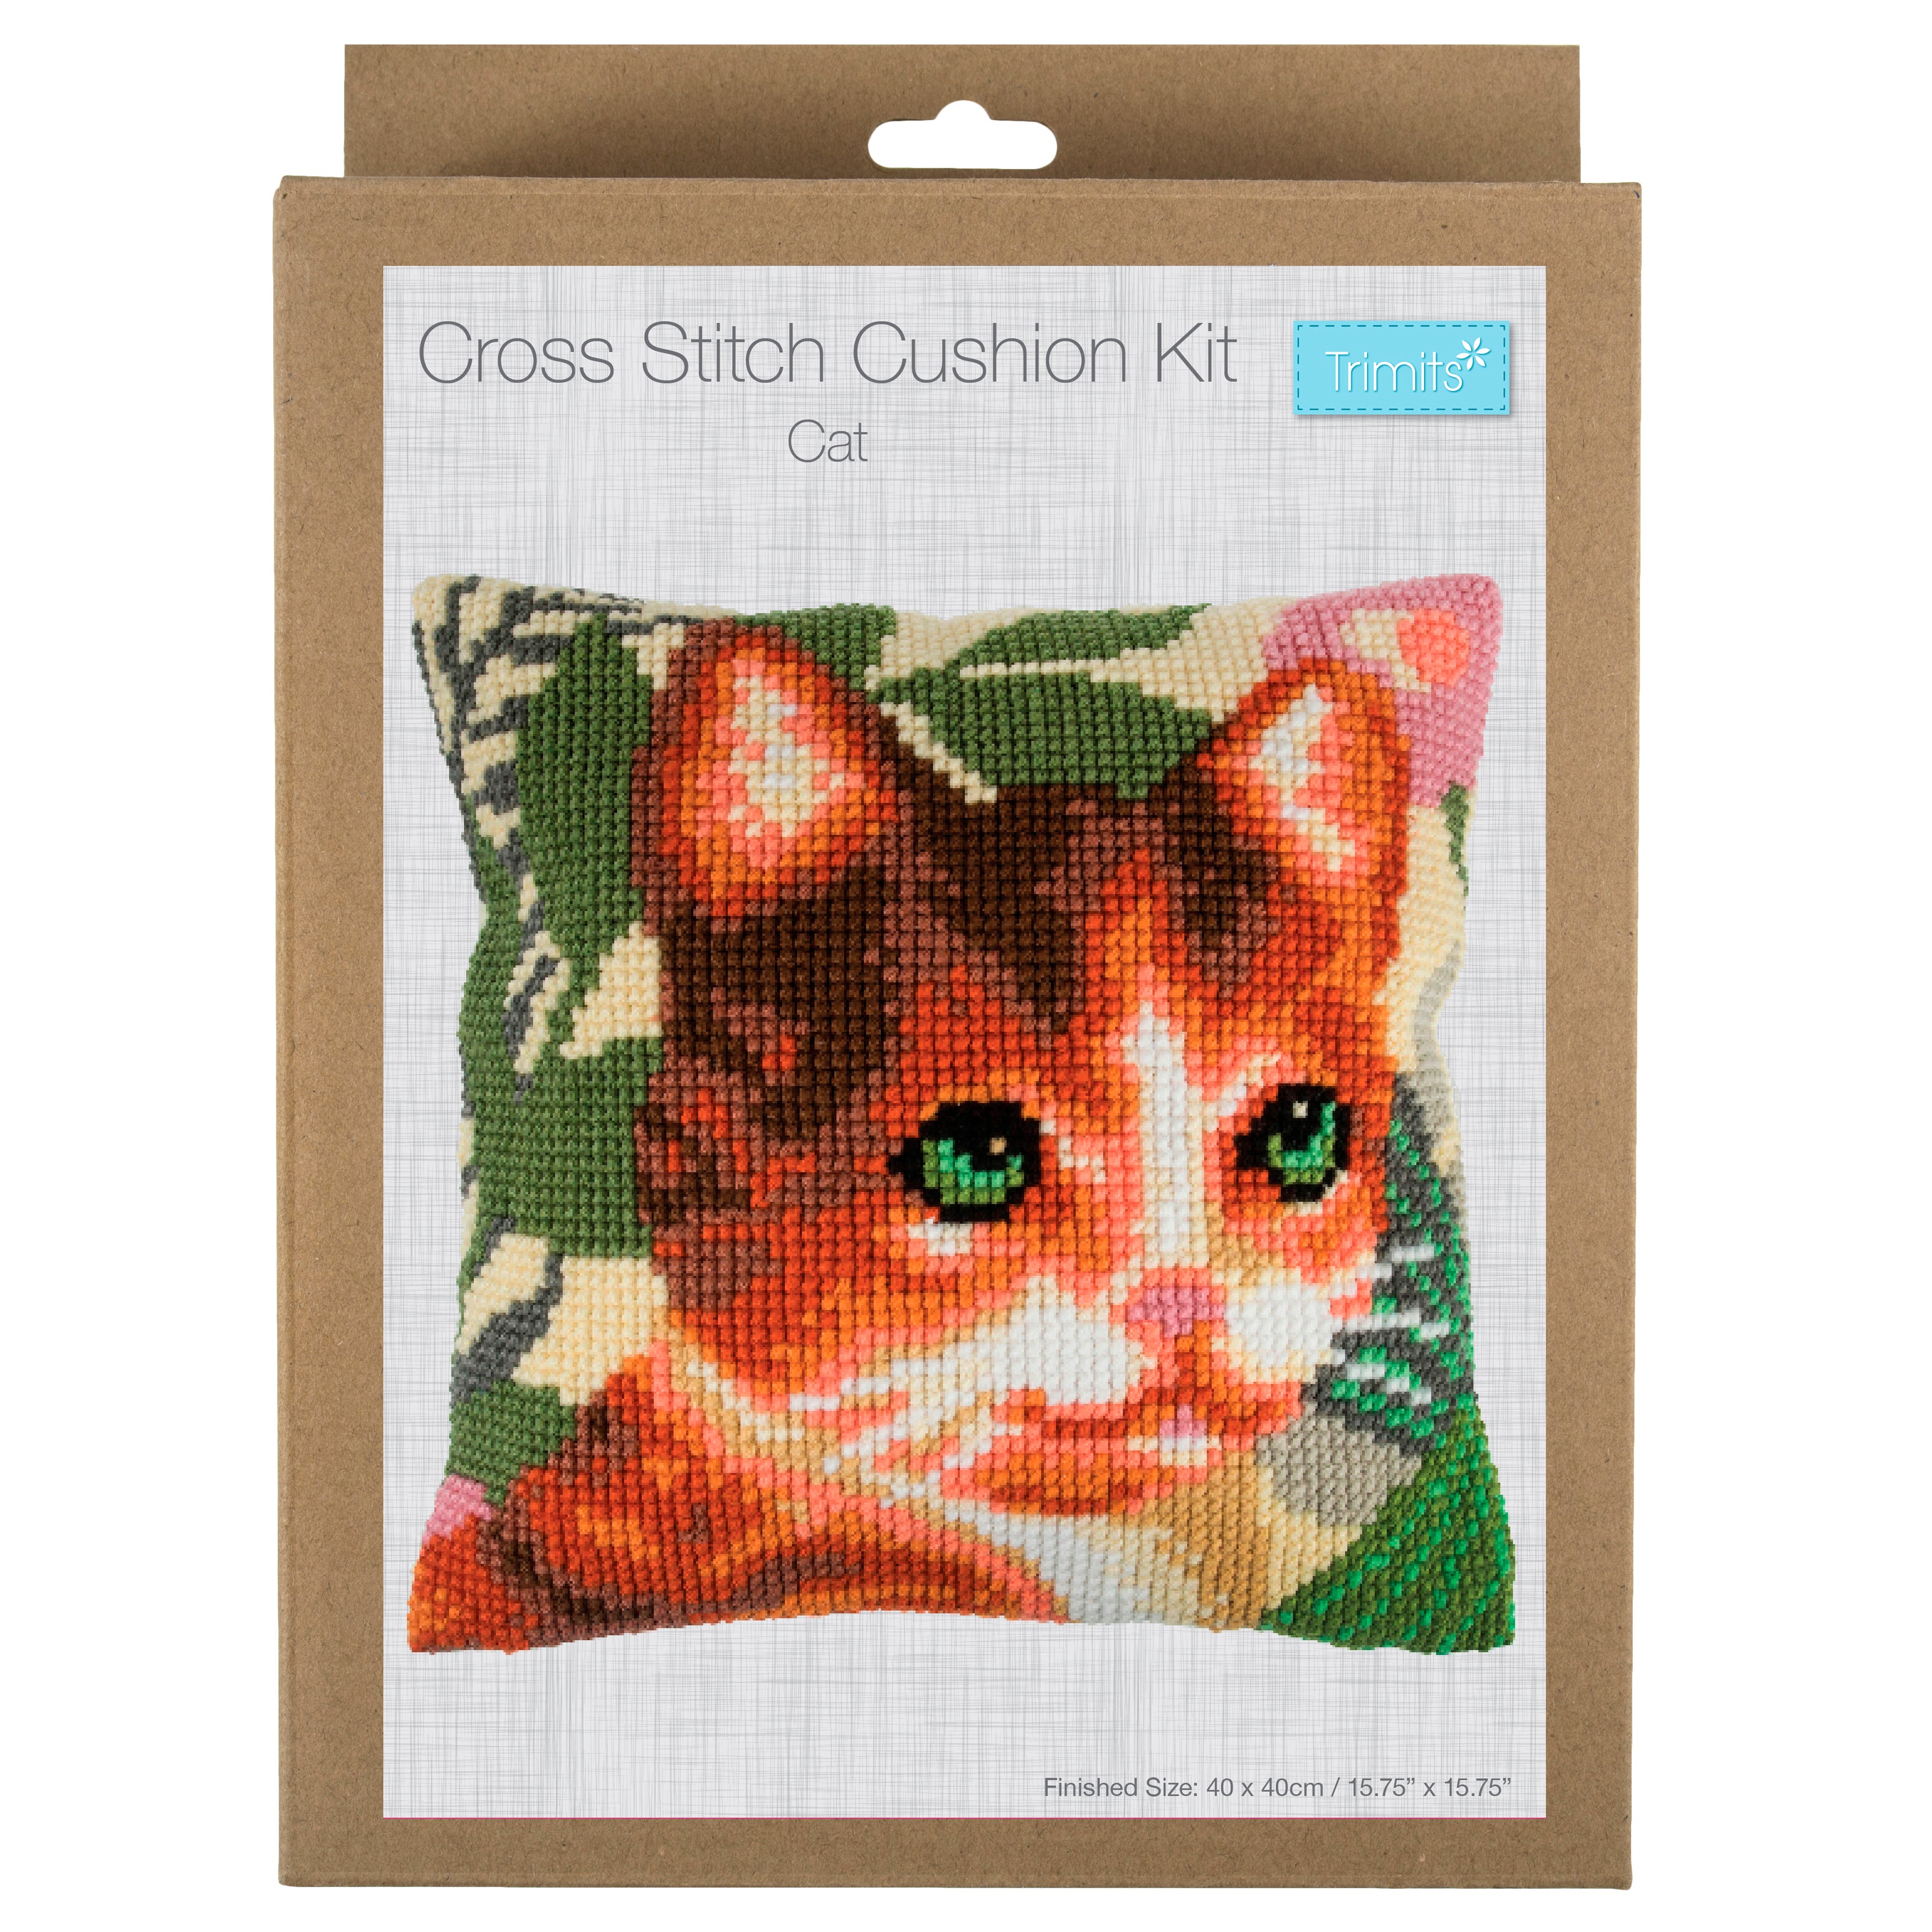 Cross Stitch Kit Cushion Cat